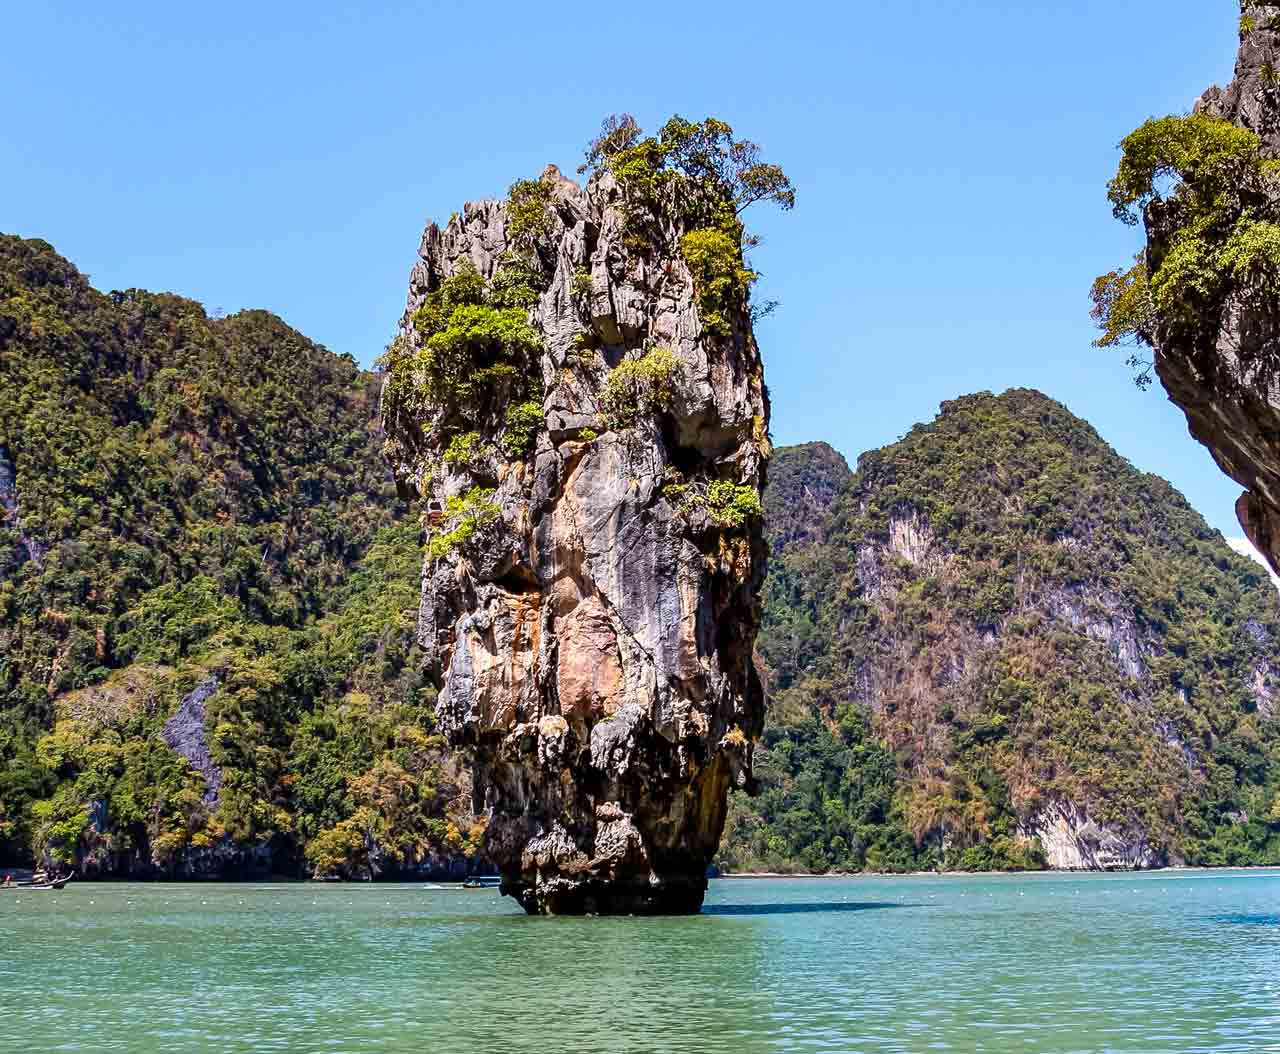 Khao Phing Kan (James Bond island), Thailand. Photo by World Wild Schooling